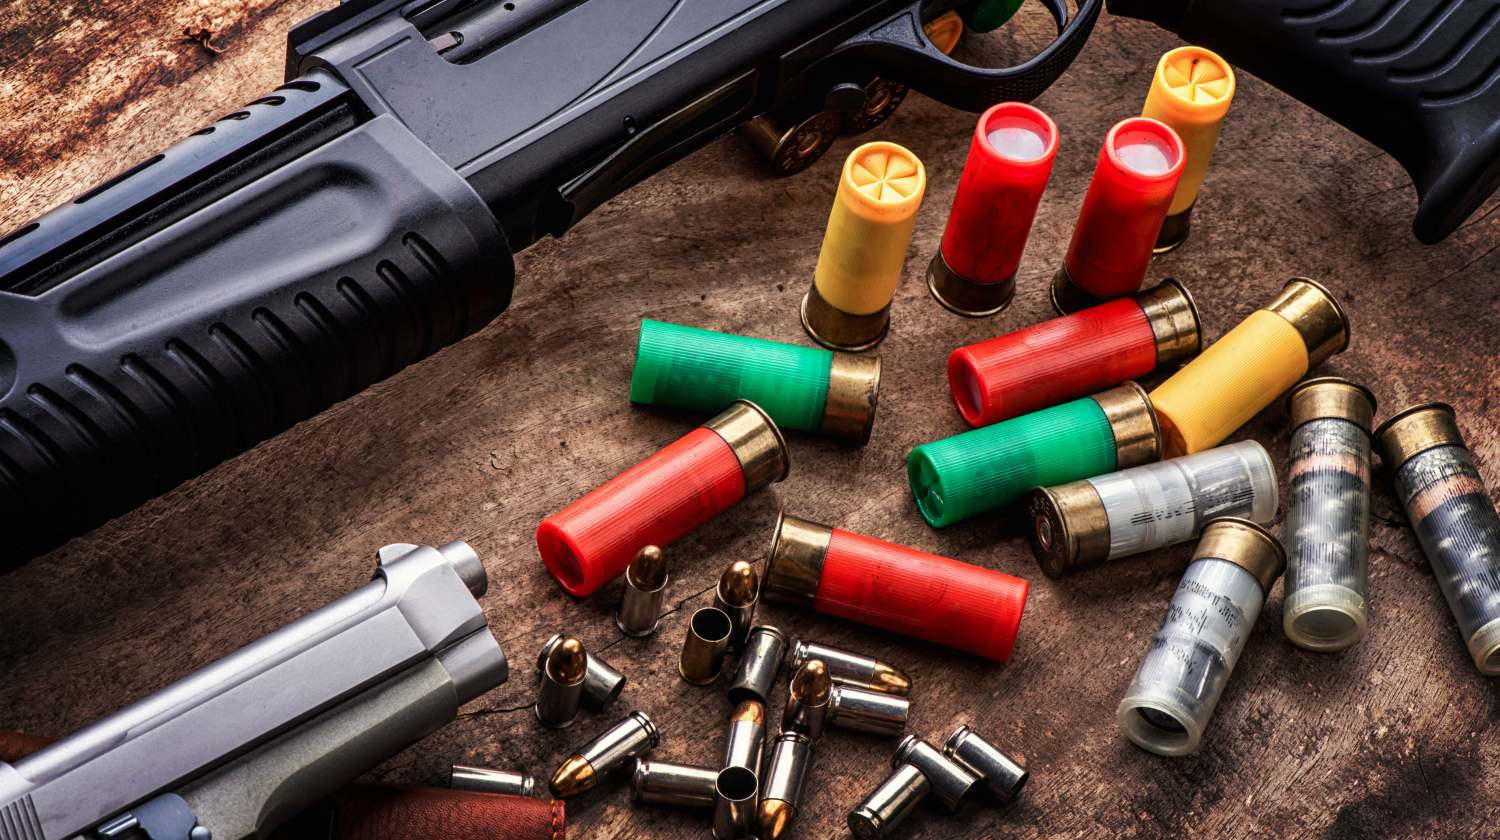 Weapons and military equipment. 9 mm pistol gun bullets and 12 gauge shotgun | Home Defense Guns | Shotgun vs. Handgun | Featured